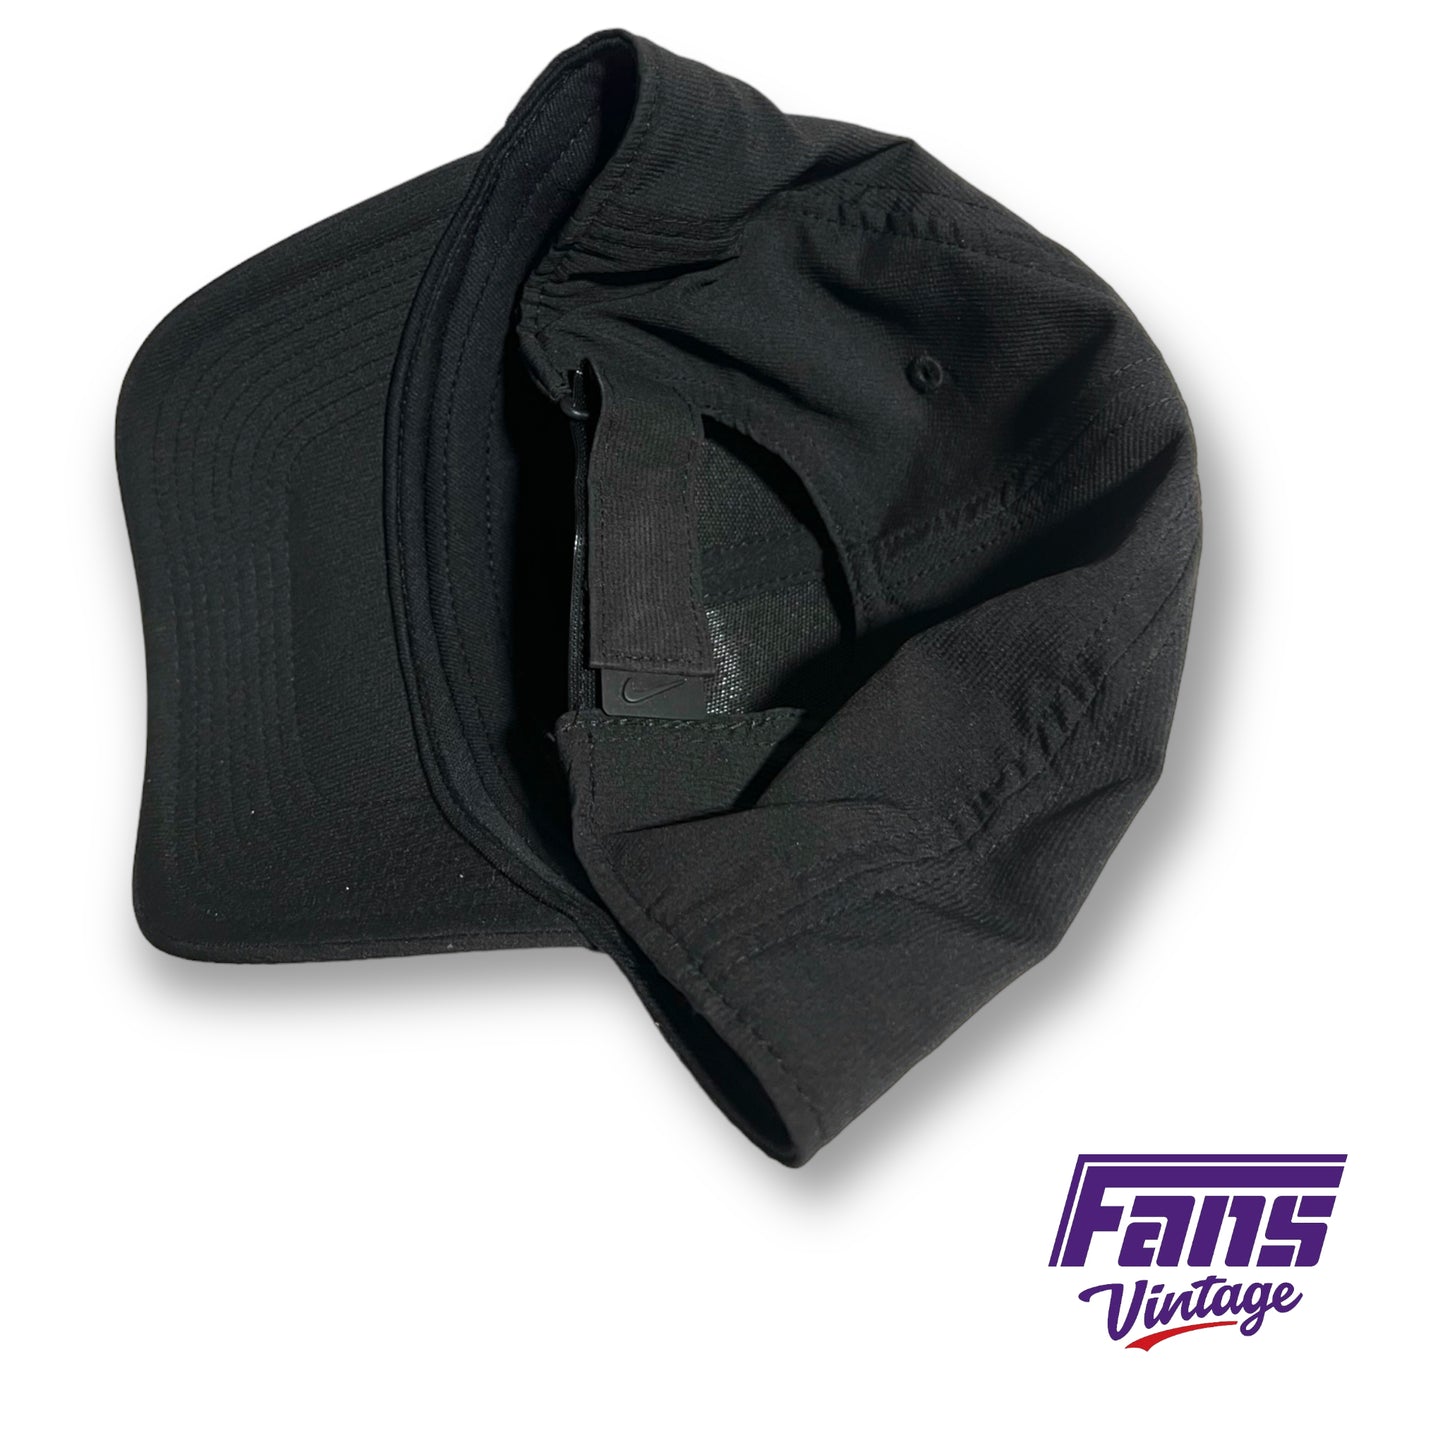 Nike Blackout TCU coach issued dri-fit adjustable hat - NEW!